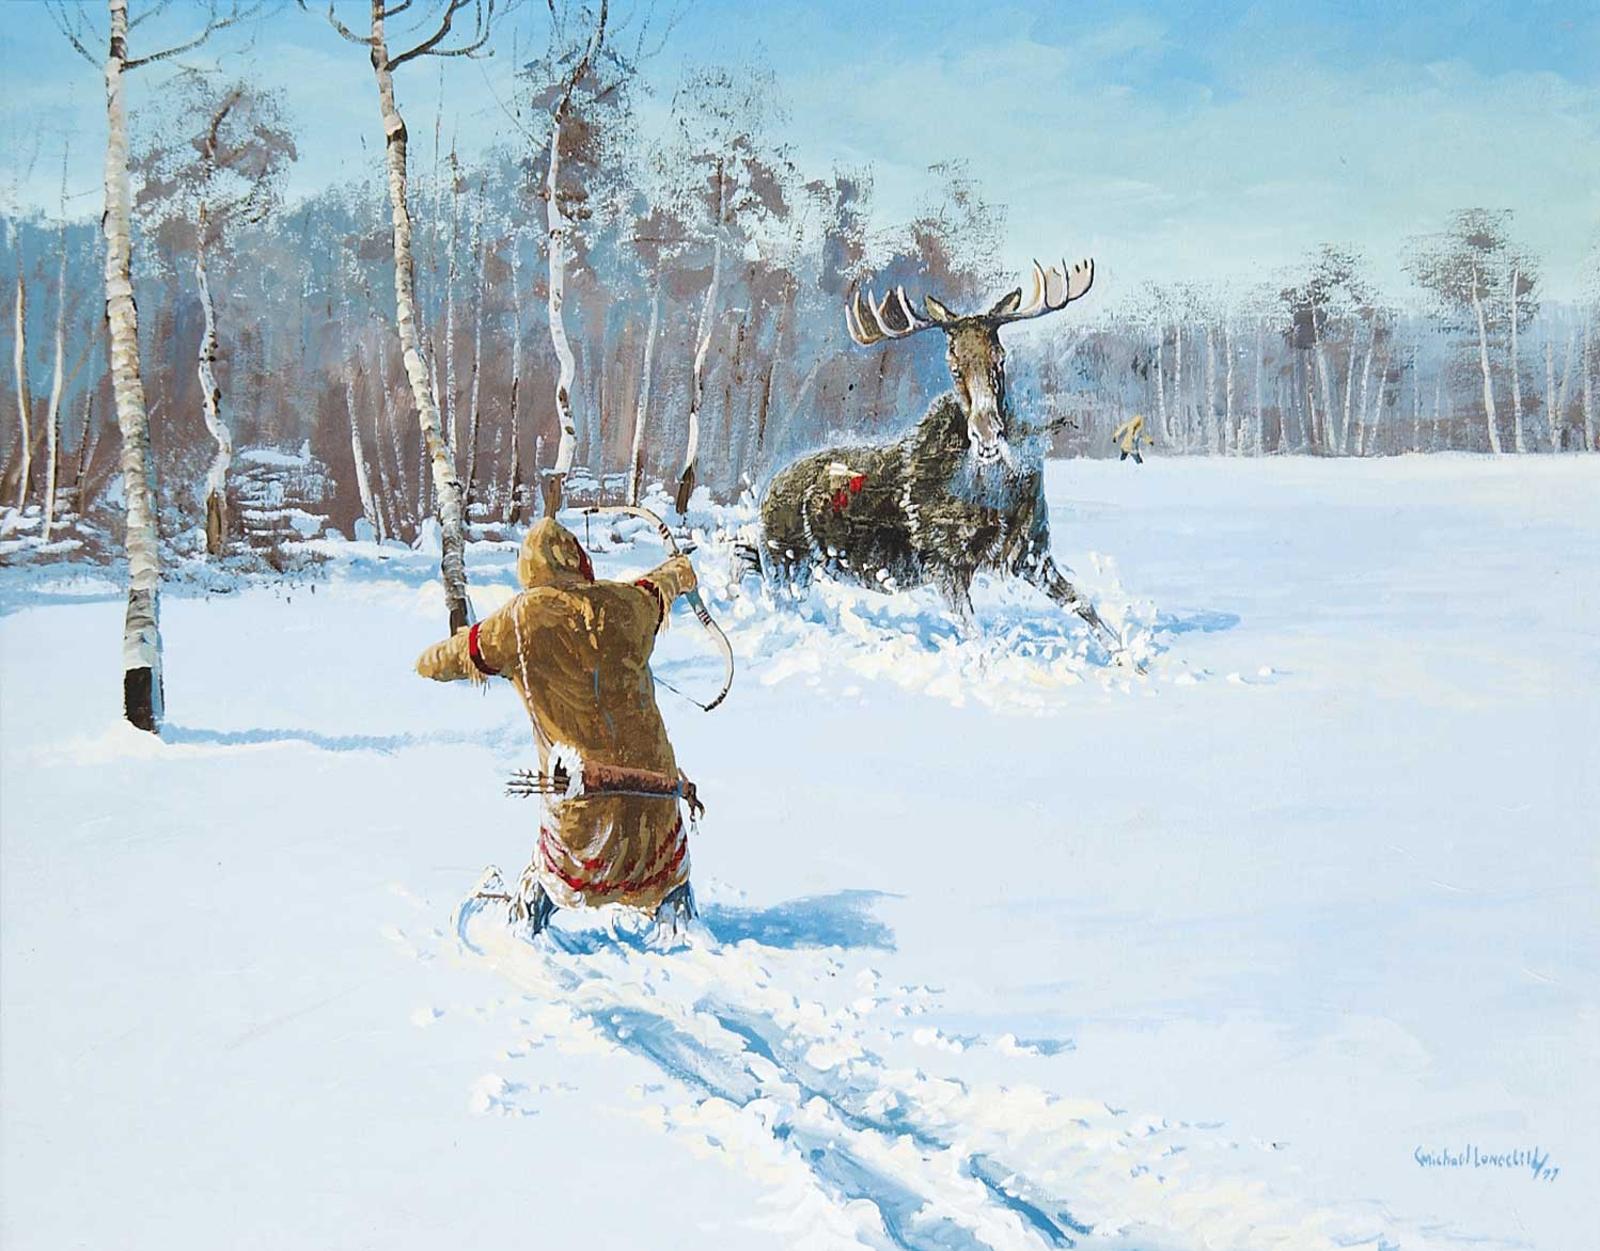 Michael Lonechild (1955) - Chasing Down the Bull Moose